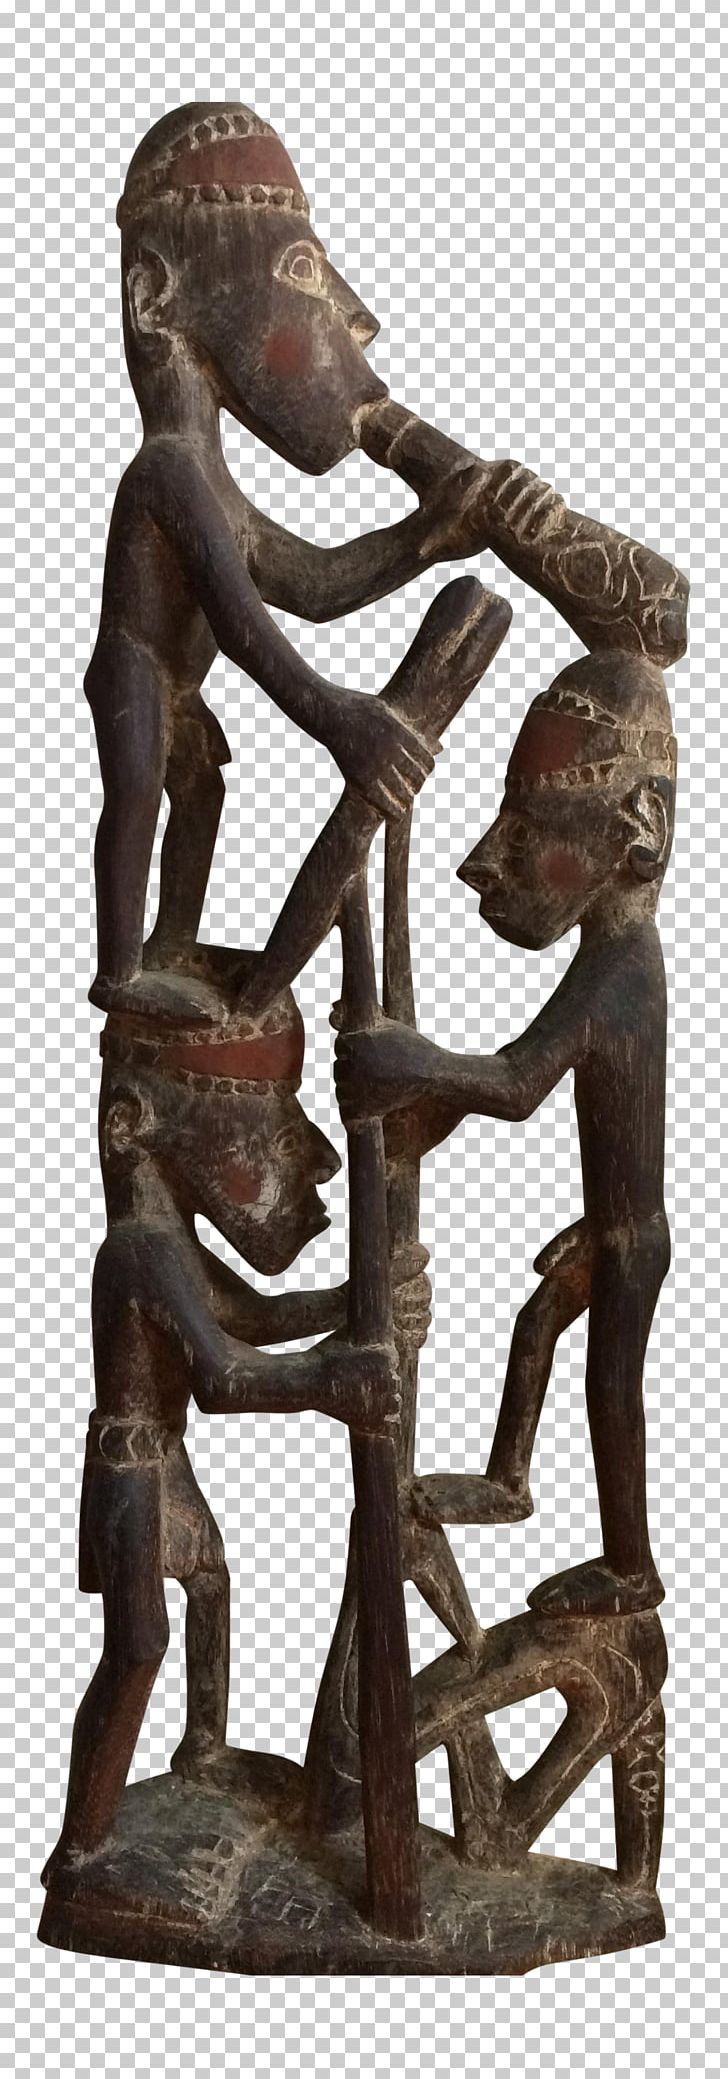 Sepik River Bronze Sculpture Kairiru Island Iatmul People PNG, Clipart, Art, Bronze, Bronze Sculpture, Classical Sculpture, Figurine Free PNG Download